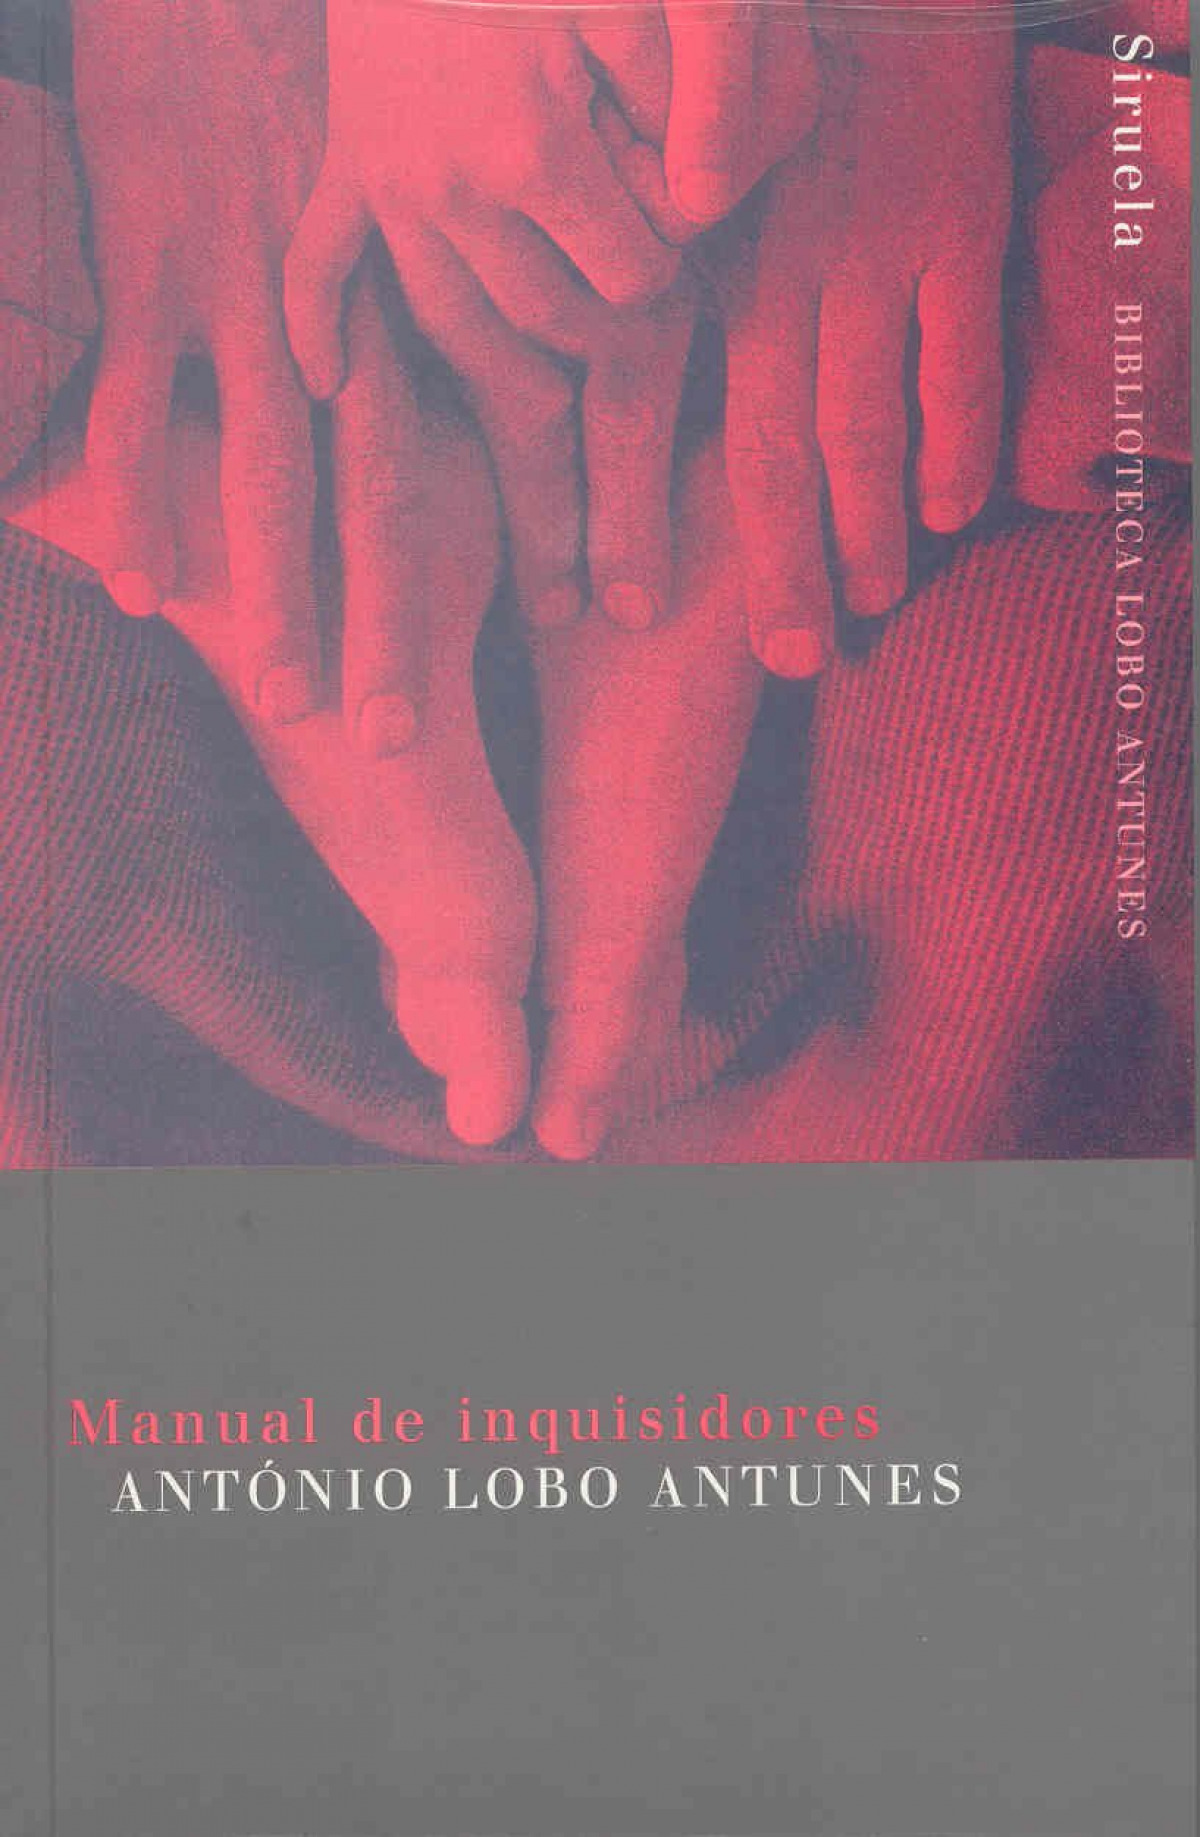 Manual de inquisidores BIBLIOTECA LOBO ANTUNES - Lobo Antunes, António